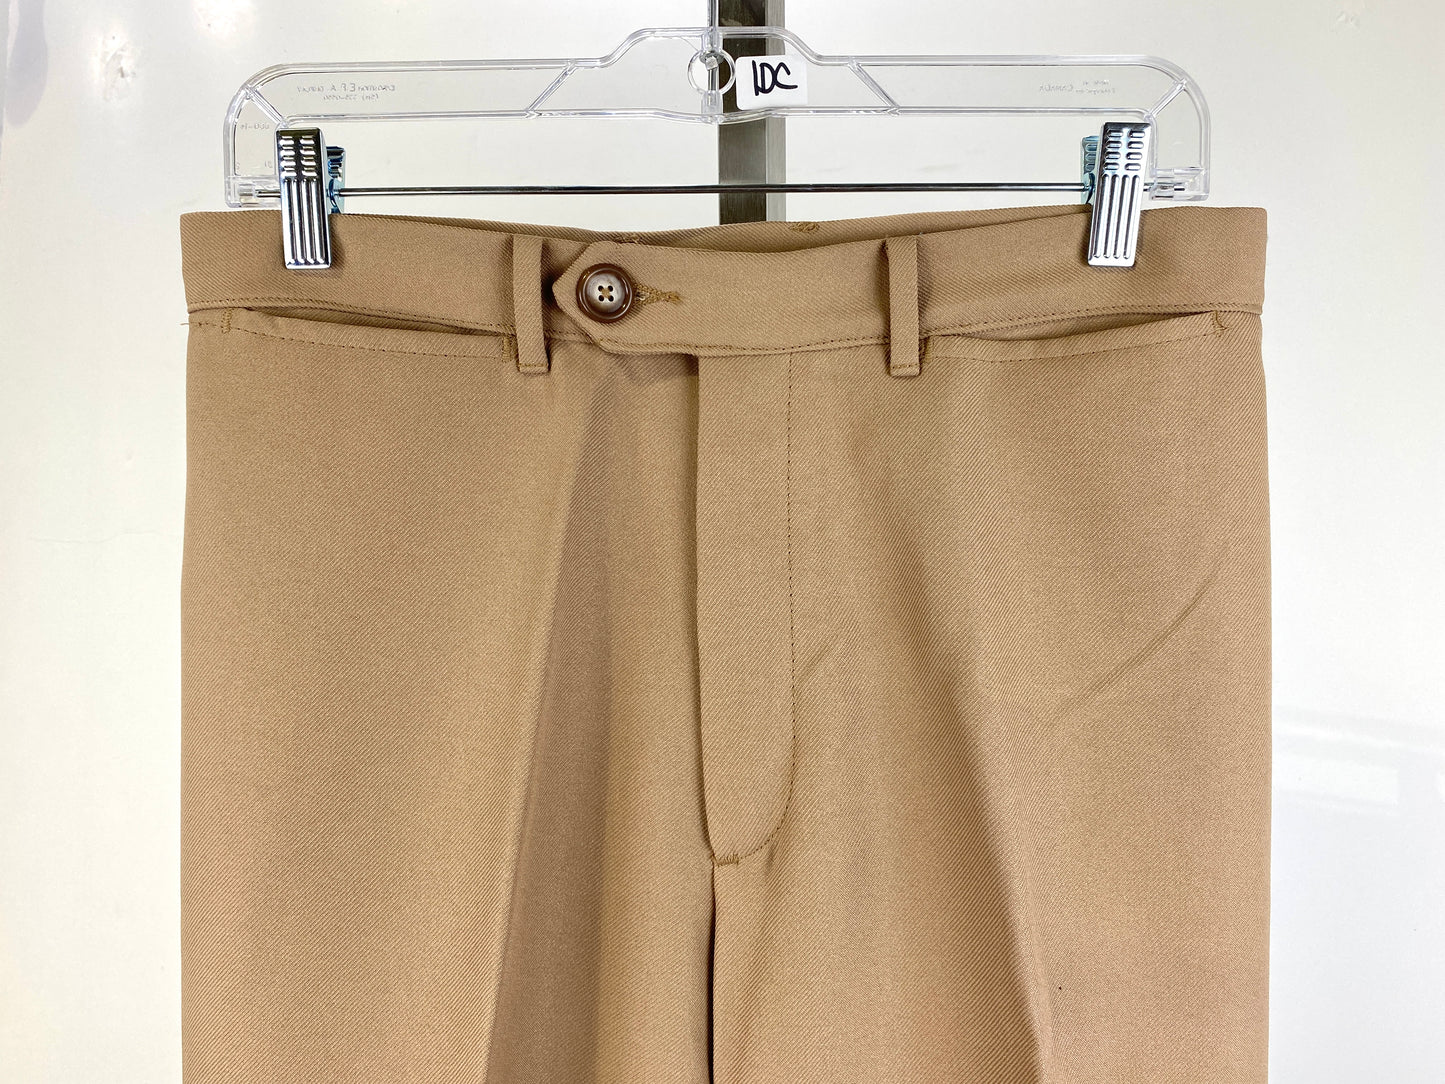 Vintage 1970s Deadstock Flared Poly Trousers, Men's Tan Slacks, NOS